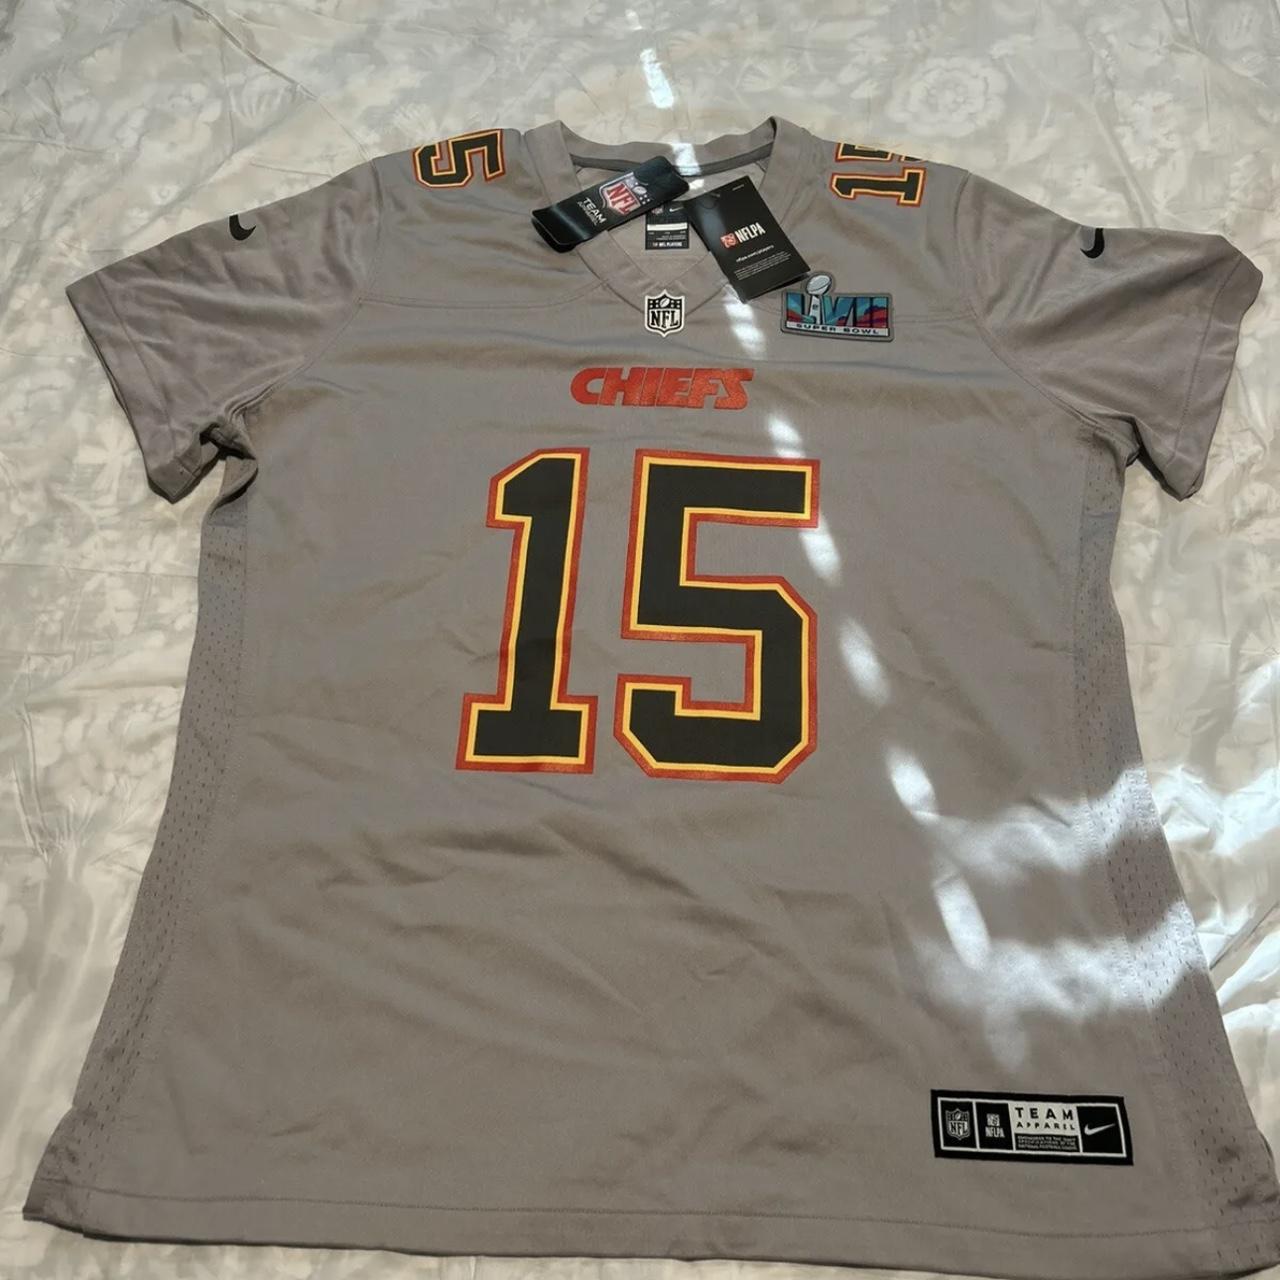 Patrick Mahomes Kansas City Chiefs Nike Super Bowl LVII Patch Atmosphere  Fashion Game Jersey - Gray